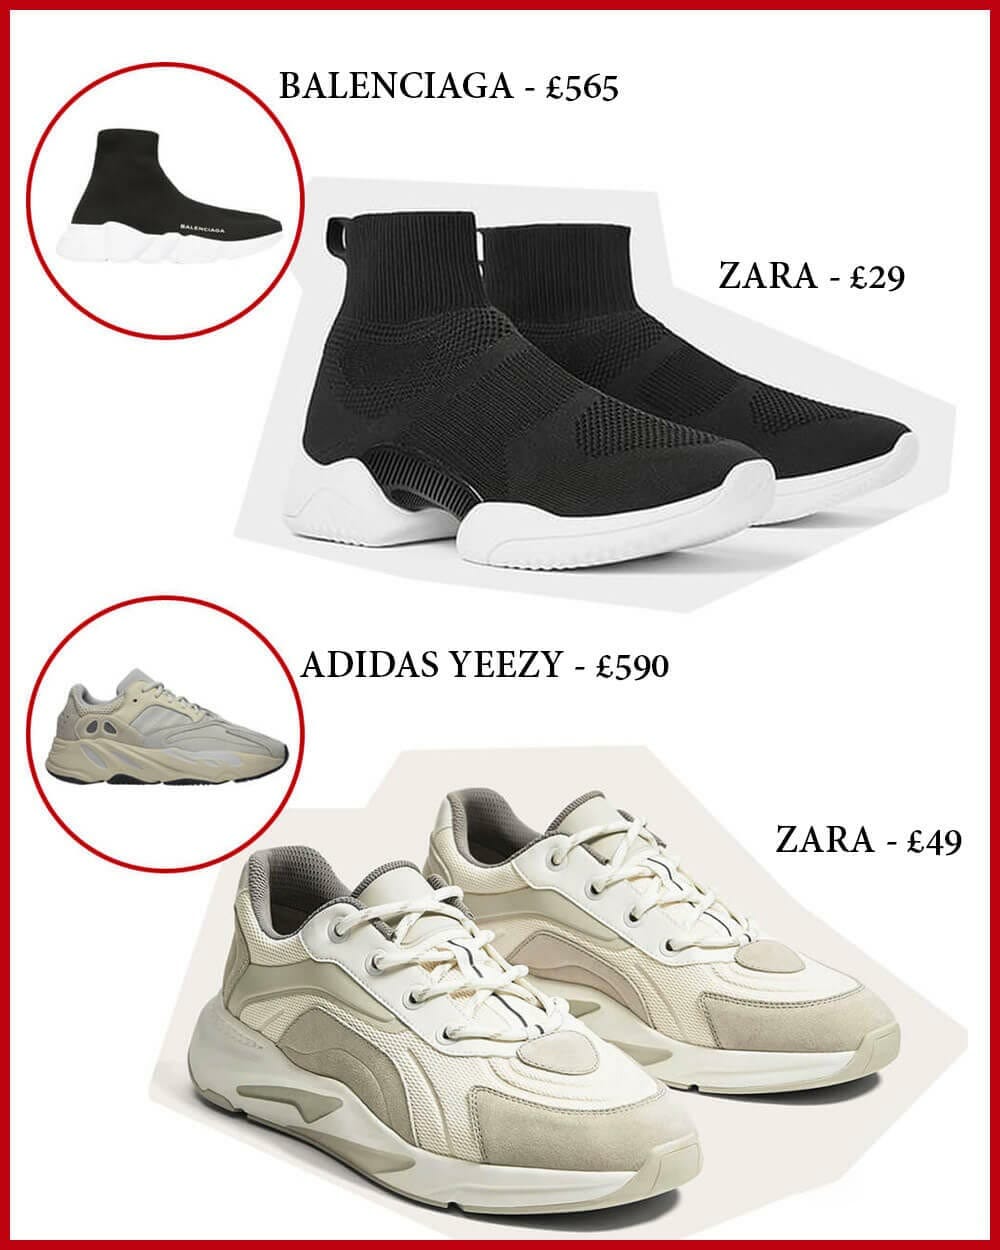 Fast Fashion ZARA copying Balenciaga and Yeezy